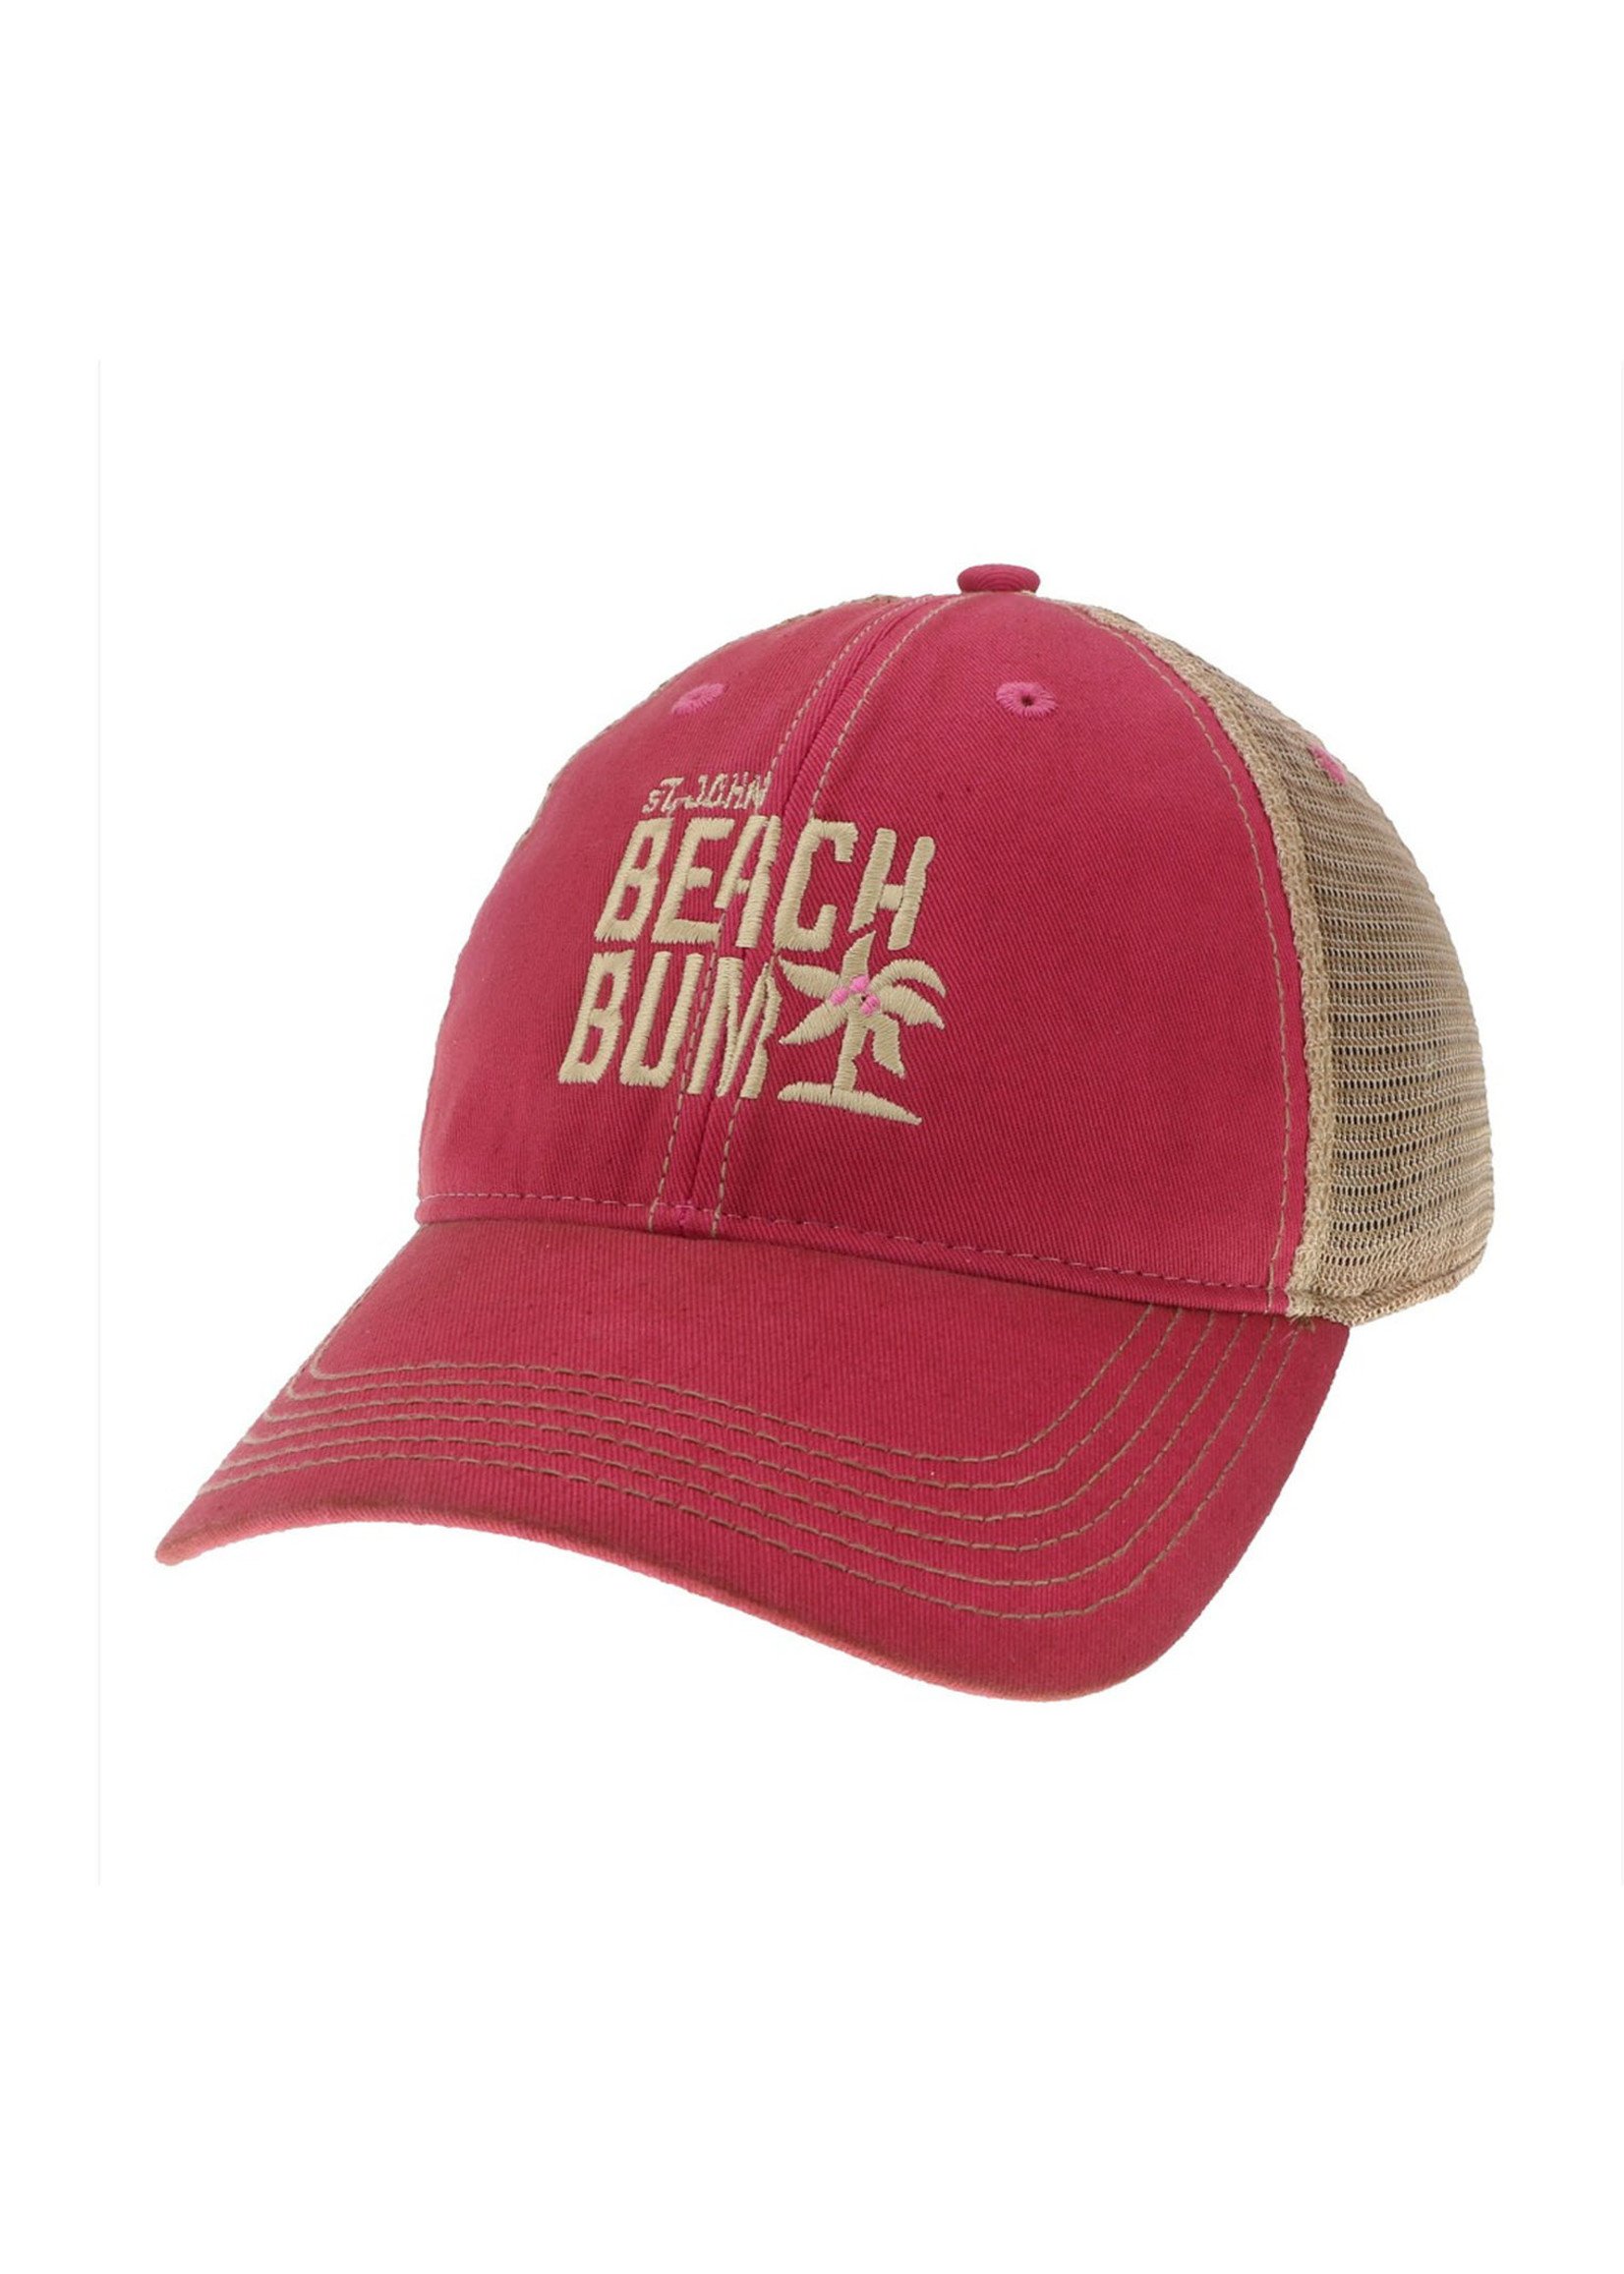 St. John Beach Bum St. John Beach Bum Hat